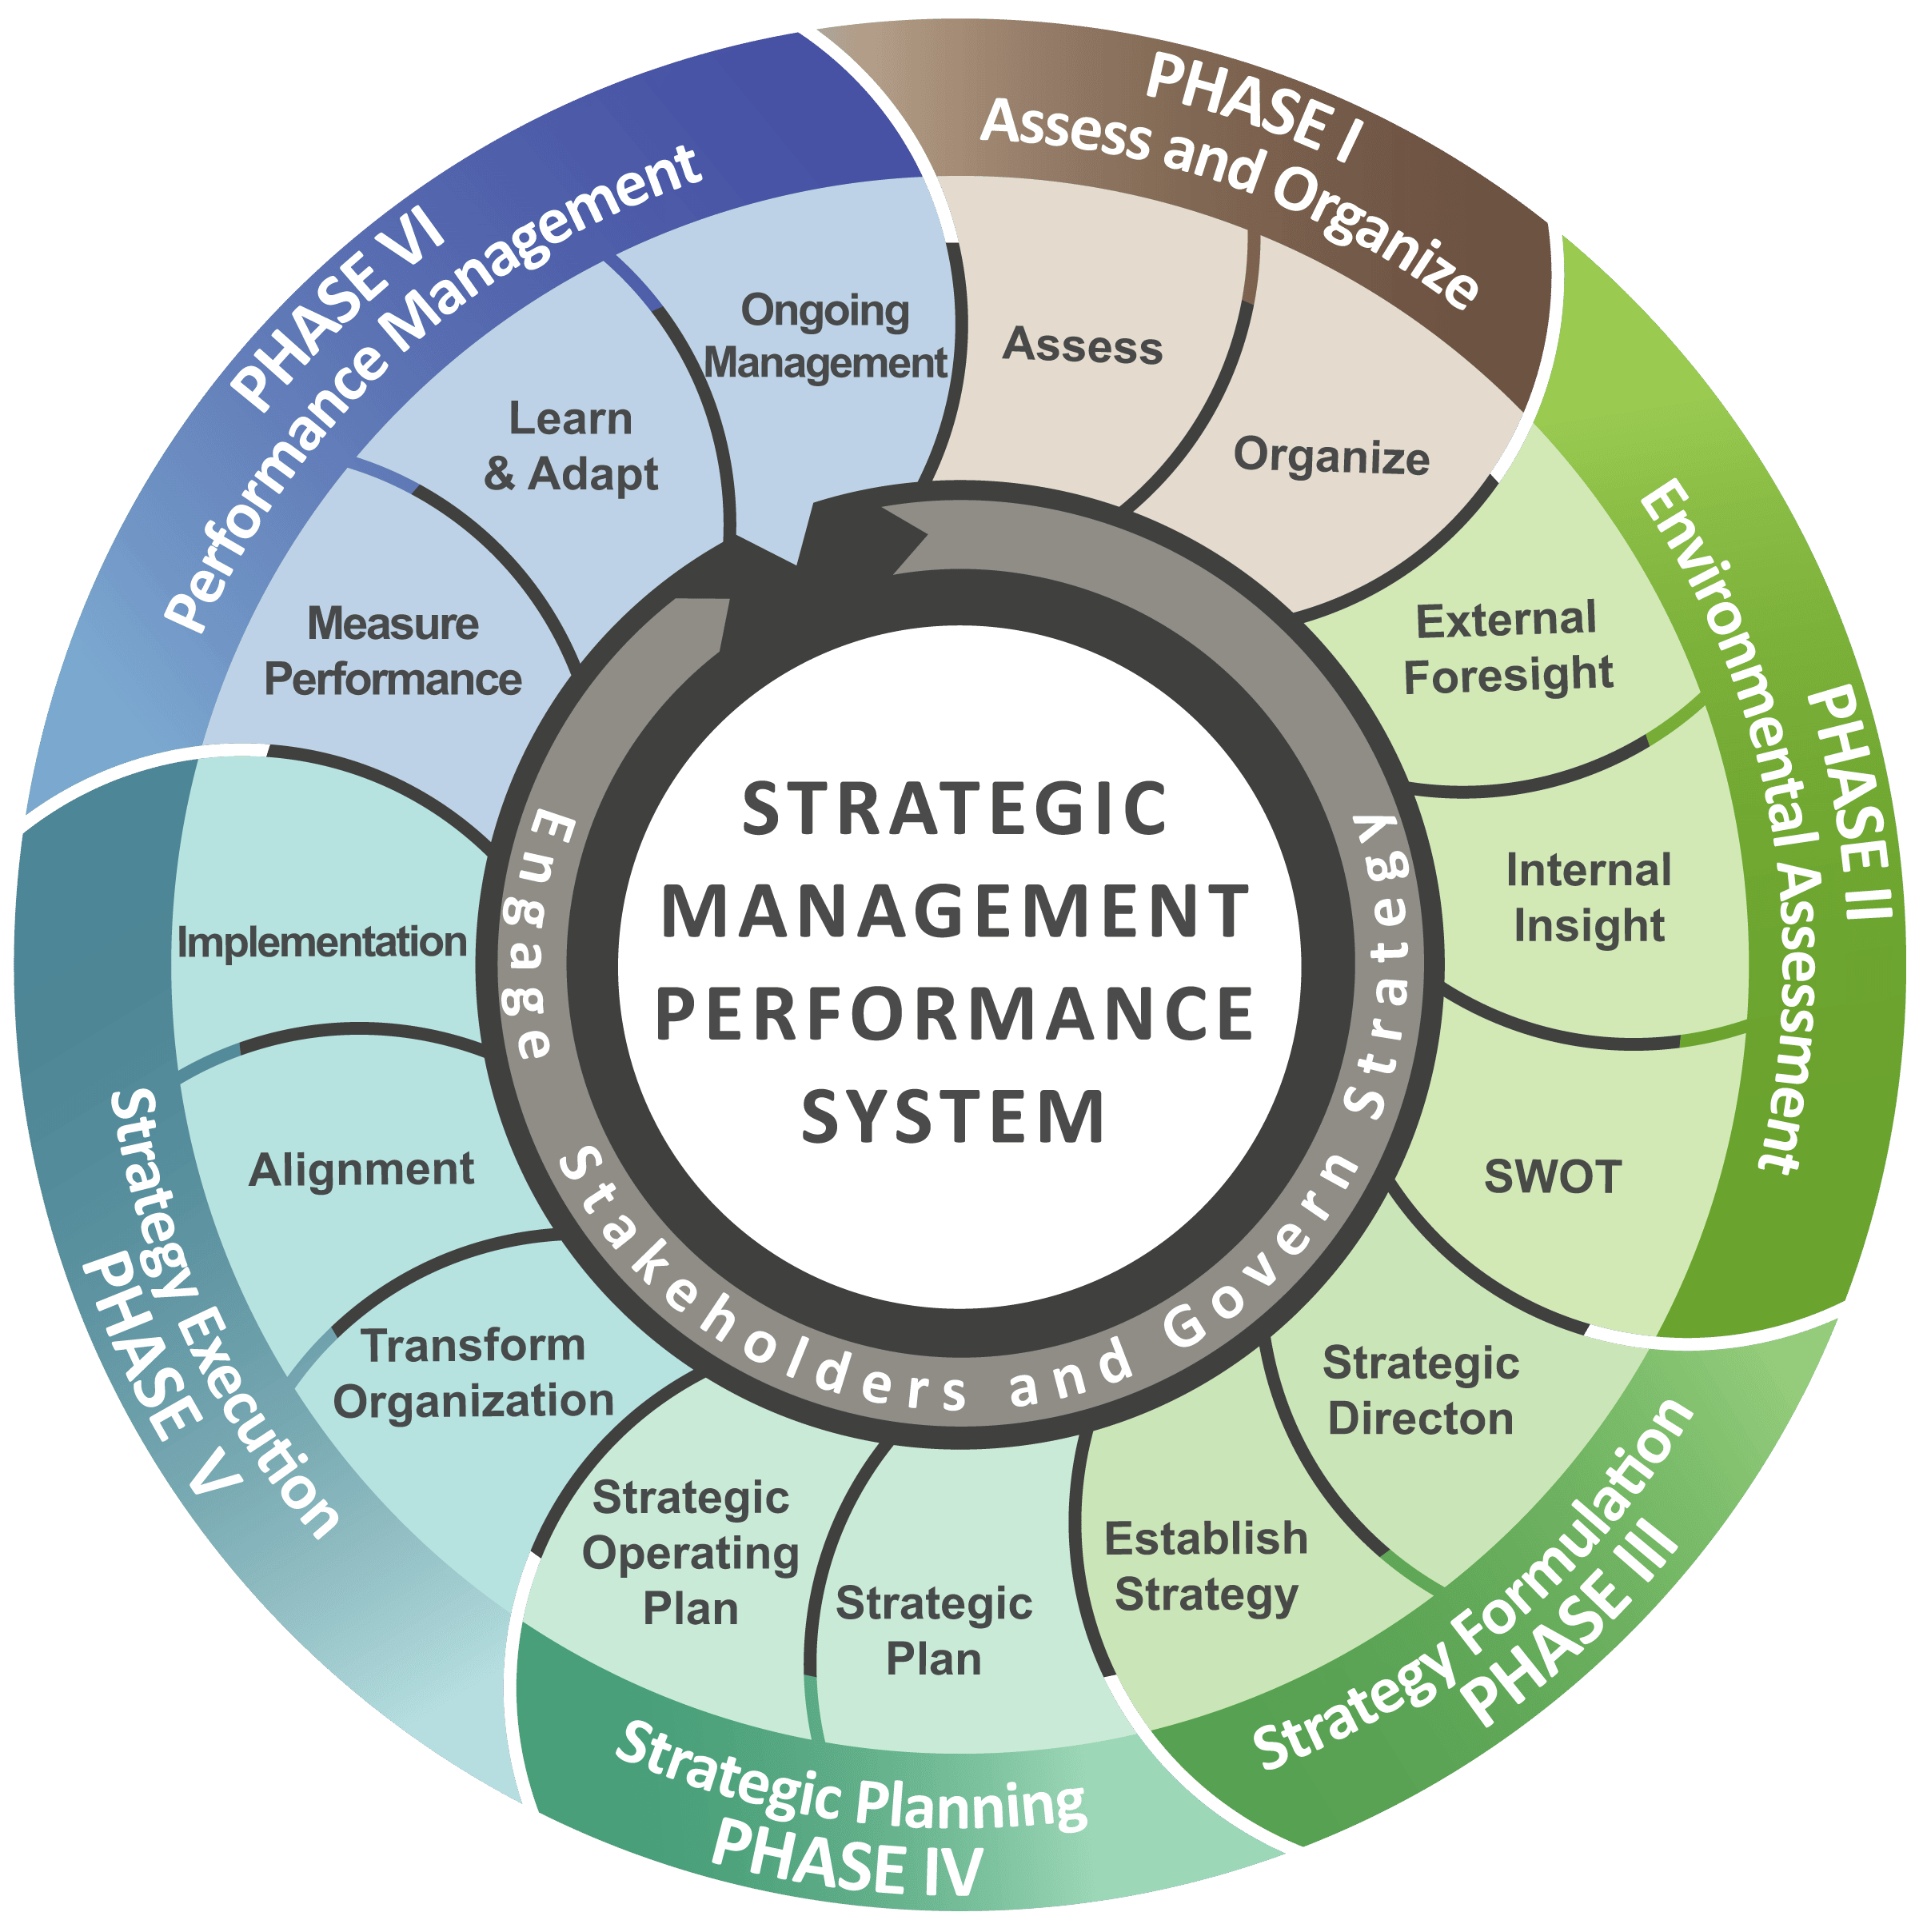 strategic management course